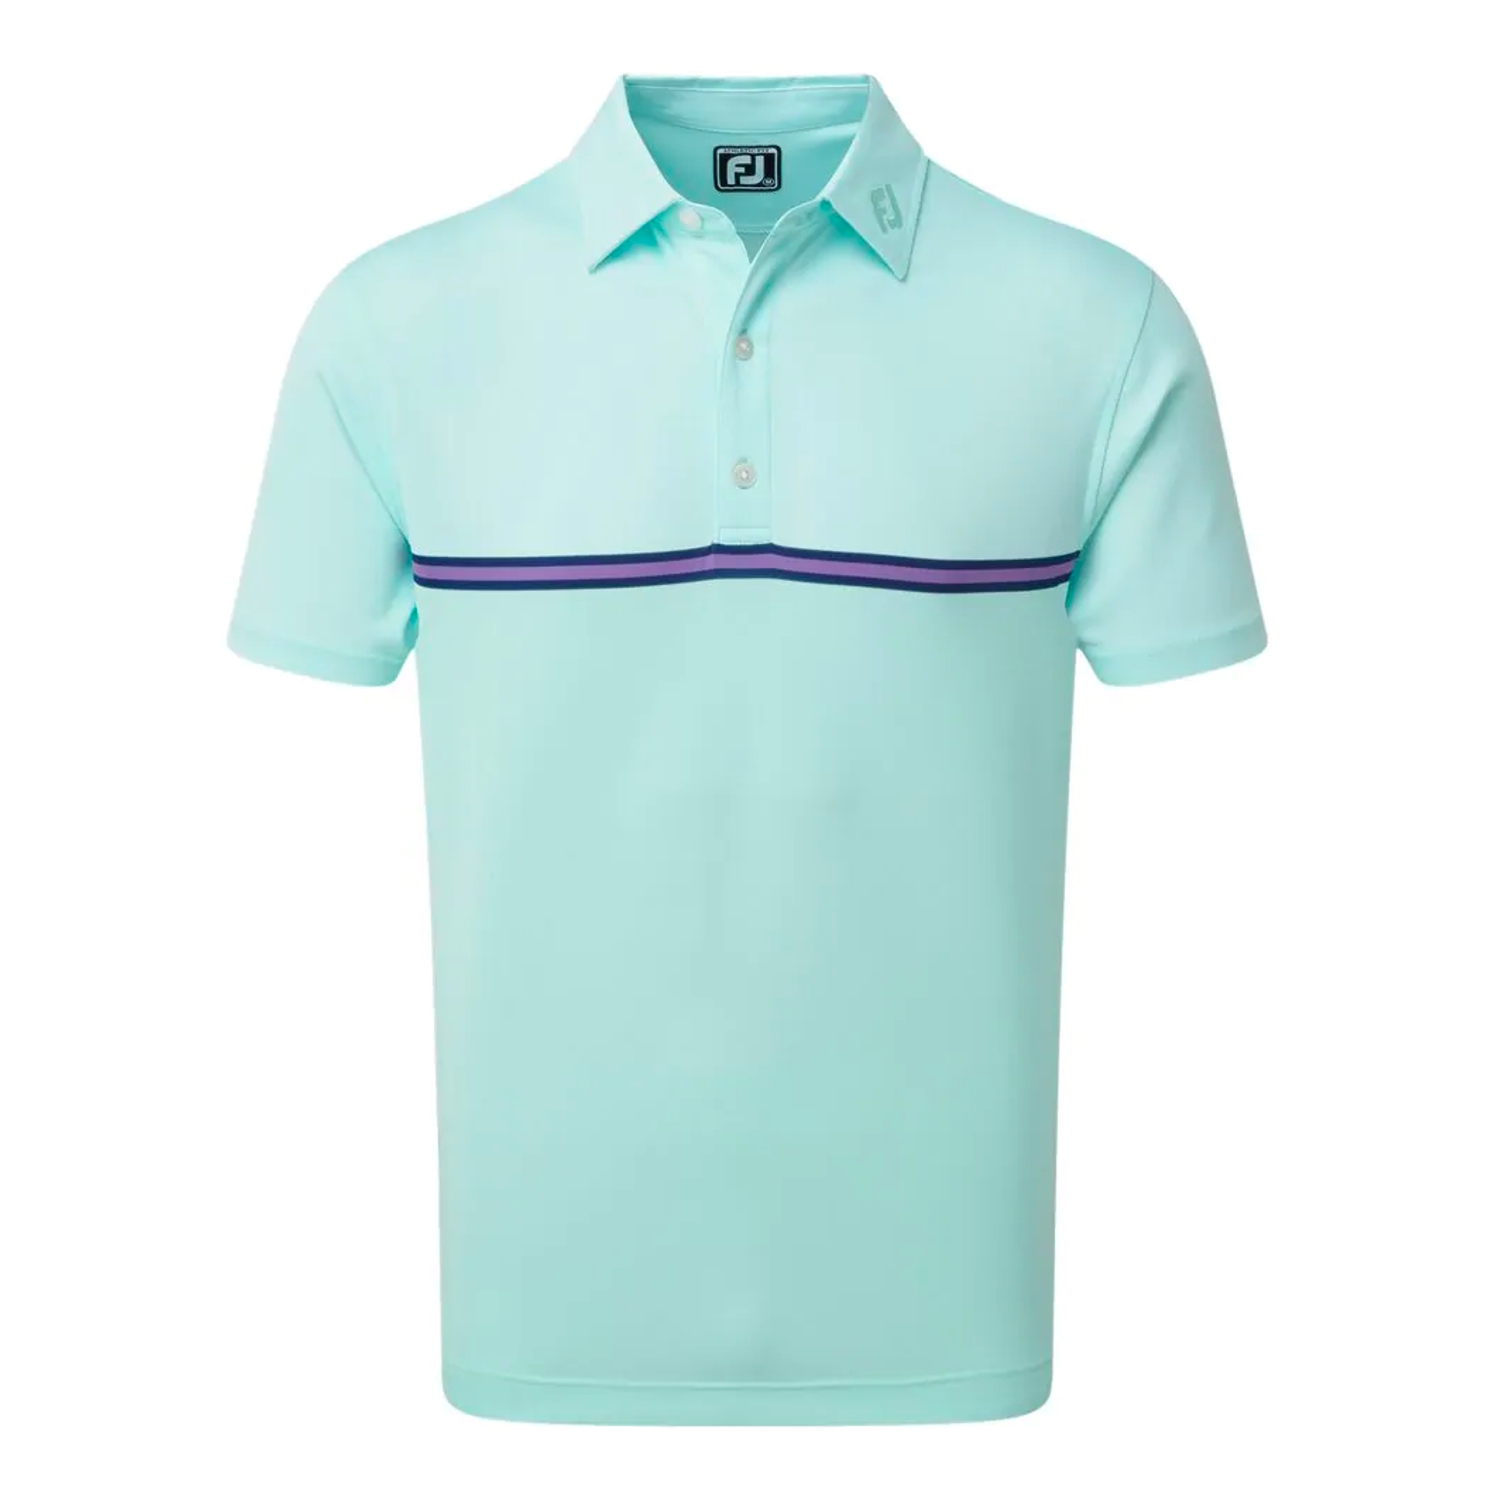 FootJoy Jacquard Top Colour Block Polo Shirt 90263 - ExpressGolf.co.uk